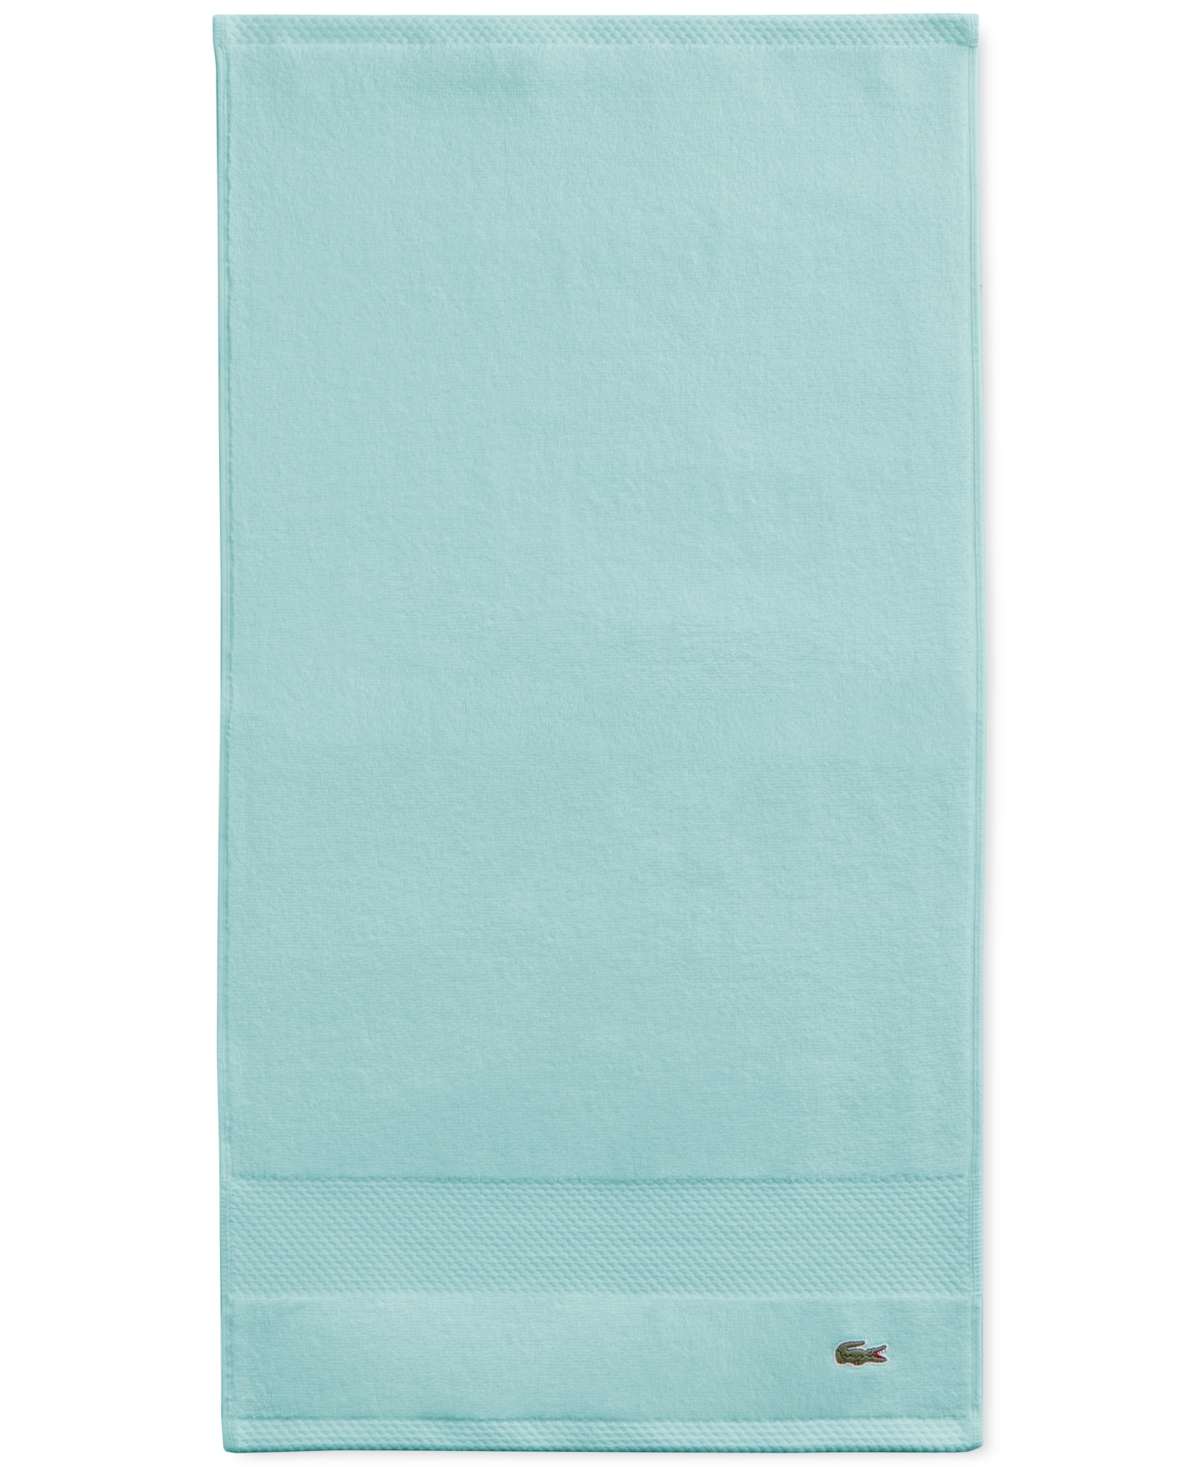 Lacoste 100% Cotton Hand Towel - Croc Green